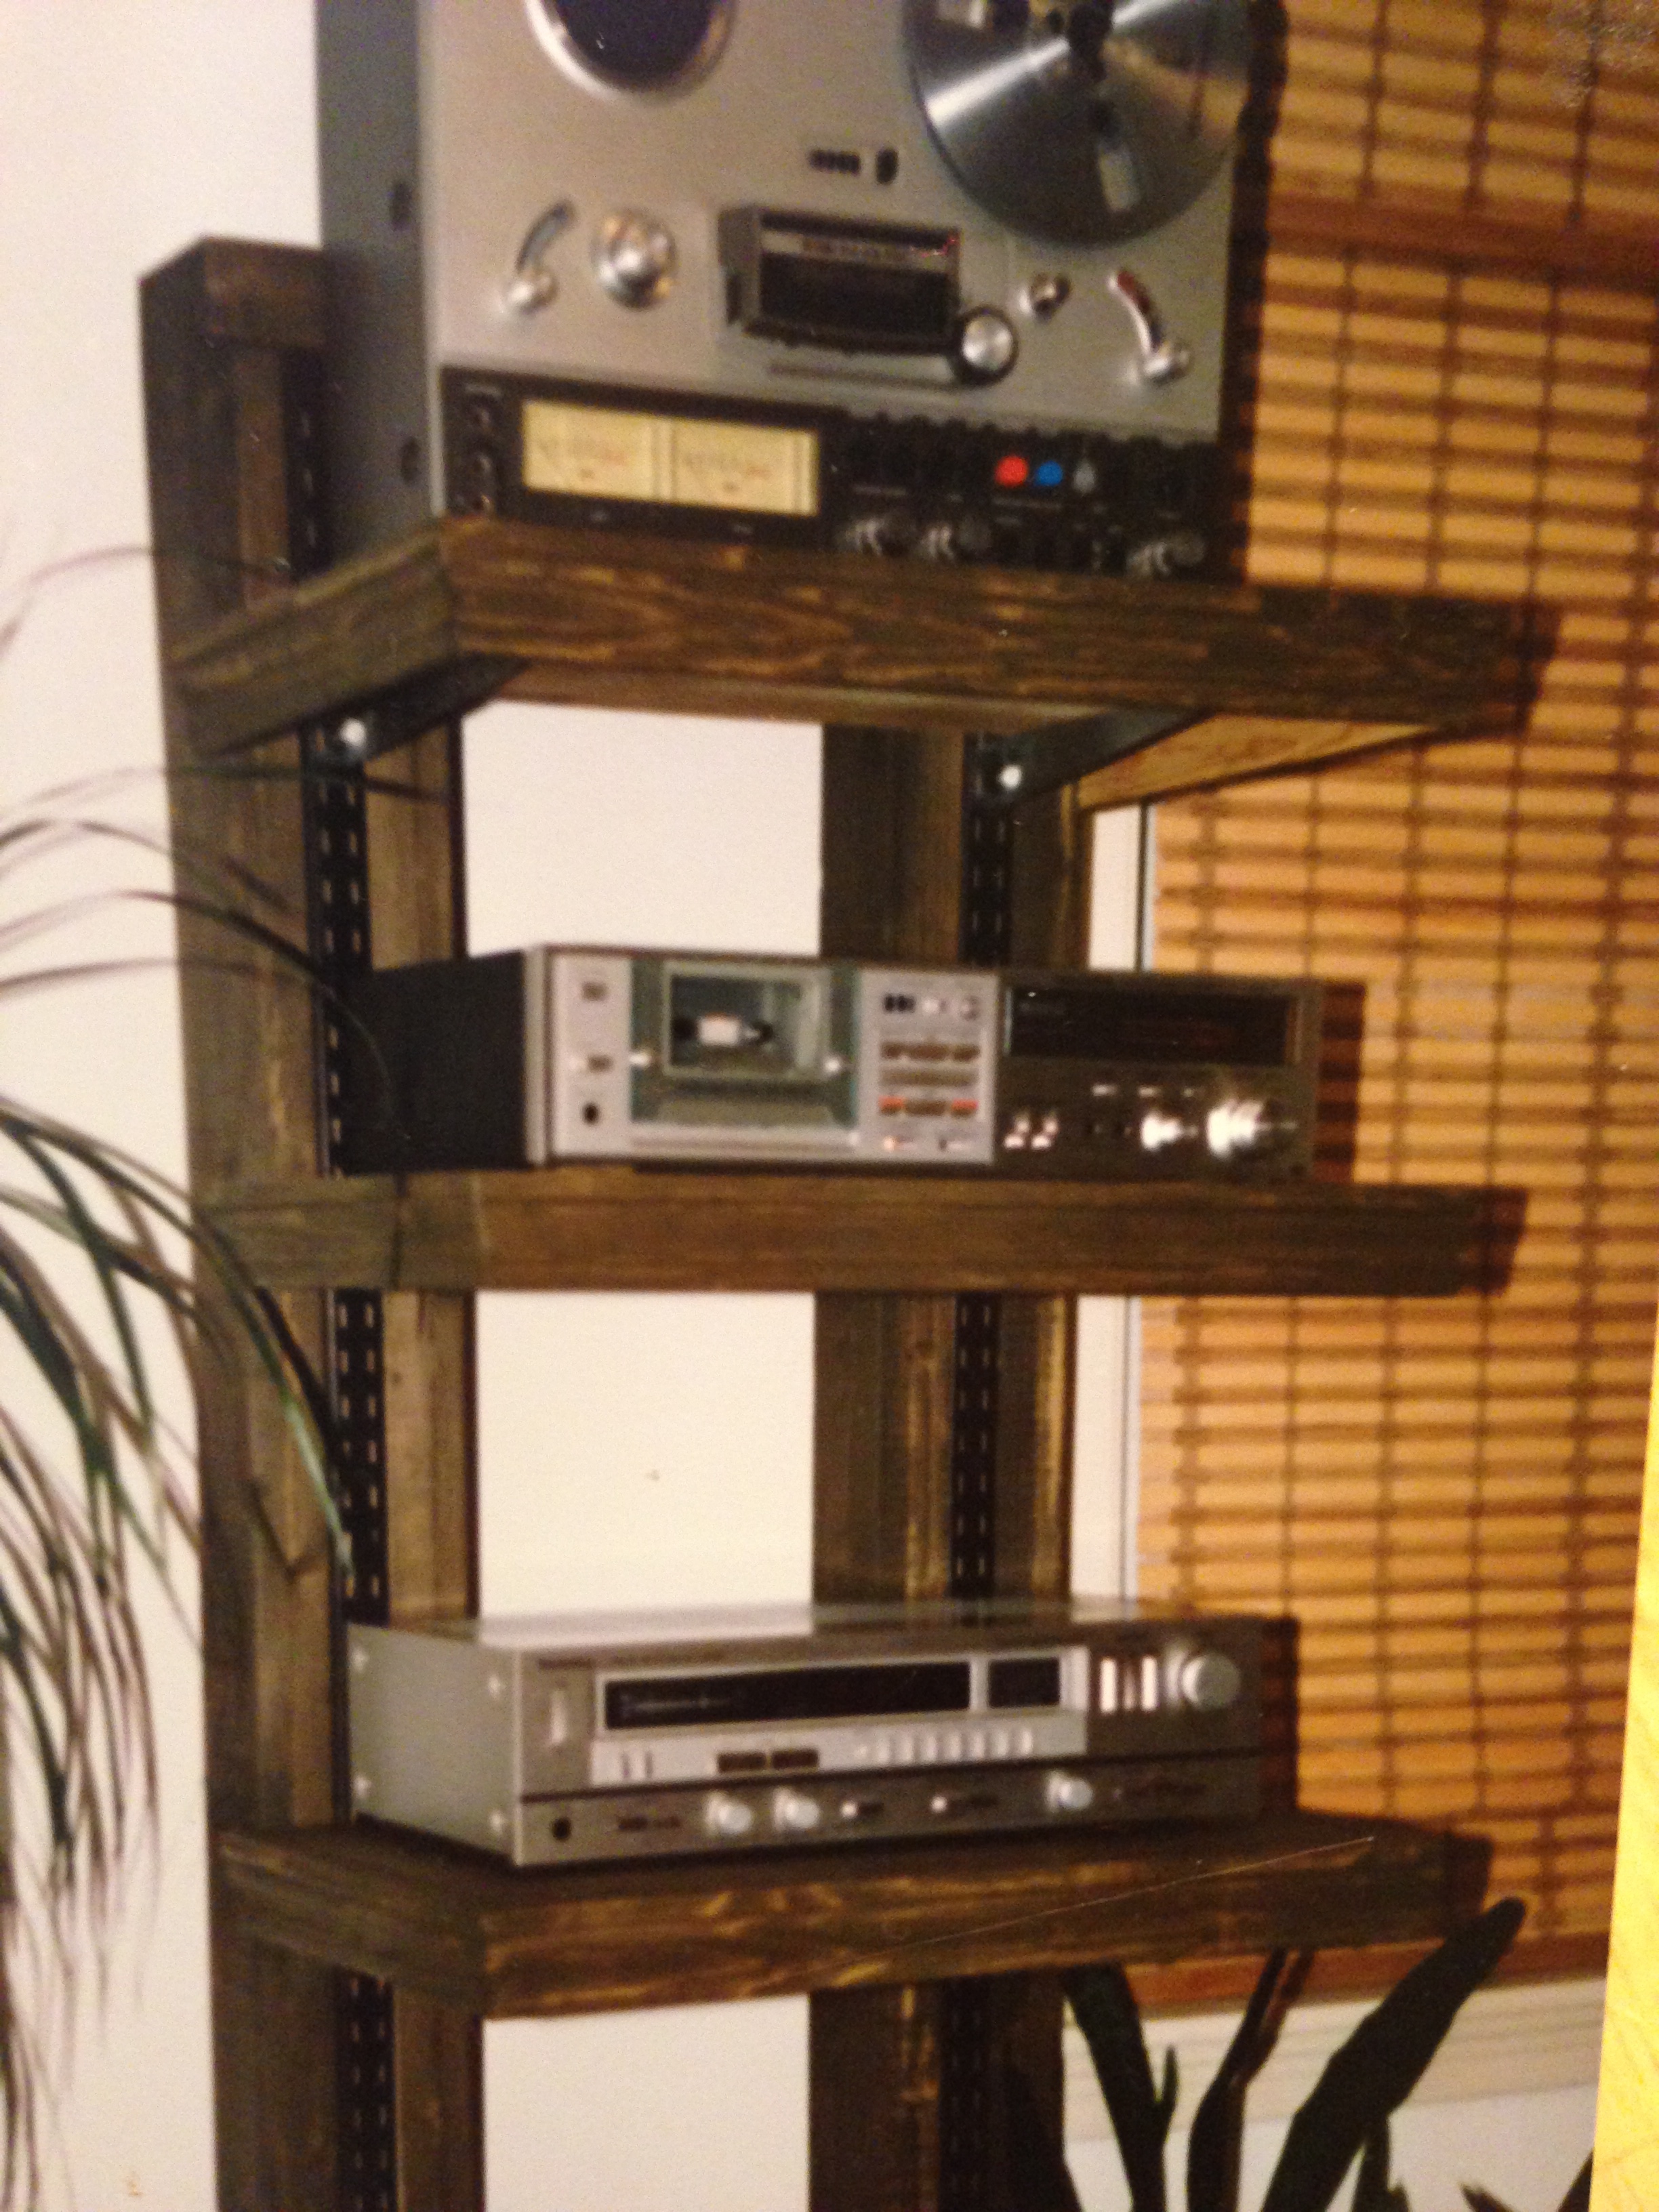 My Teenage bedroom audio system 1980 something…